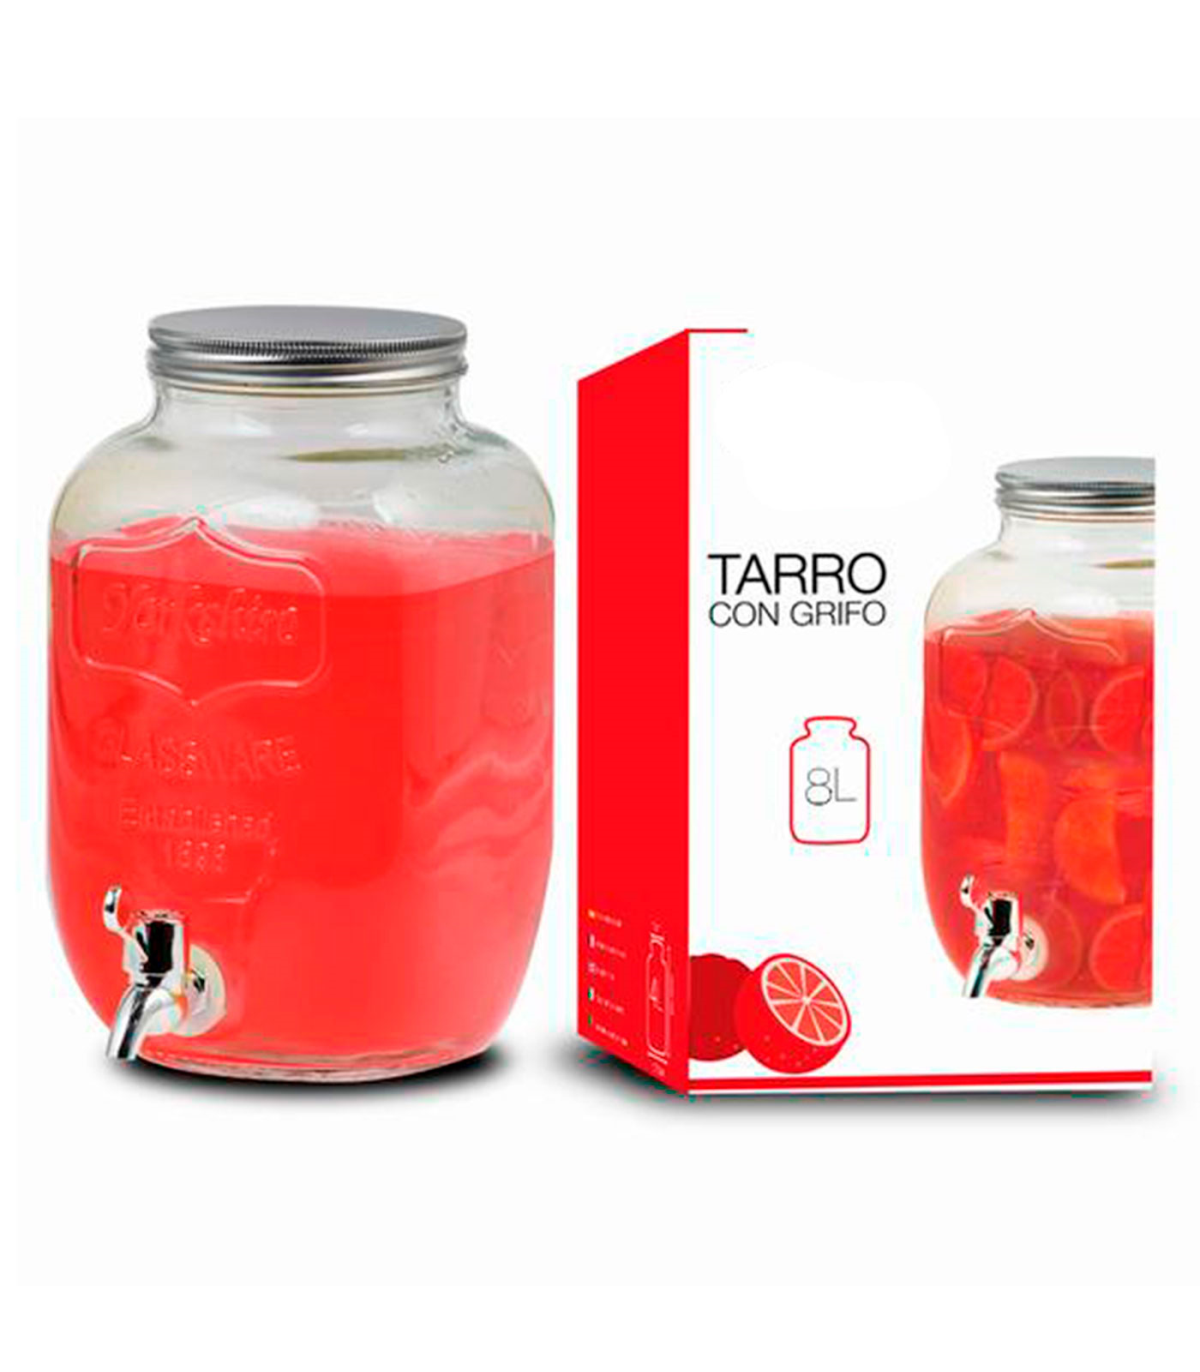 Tradineur - Jarra de cristal para agua con tapa de plástico